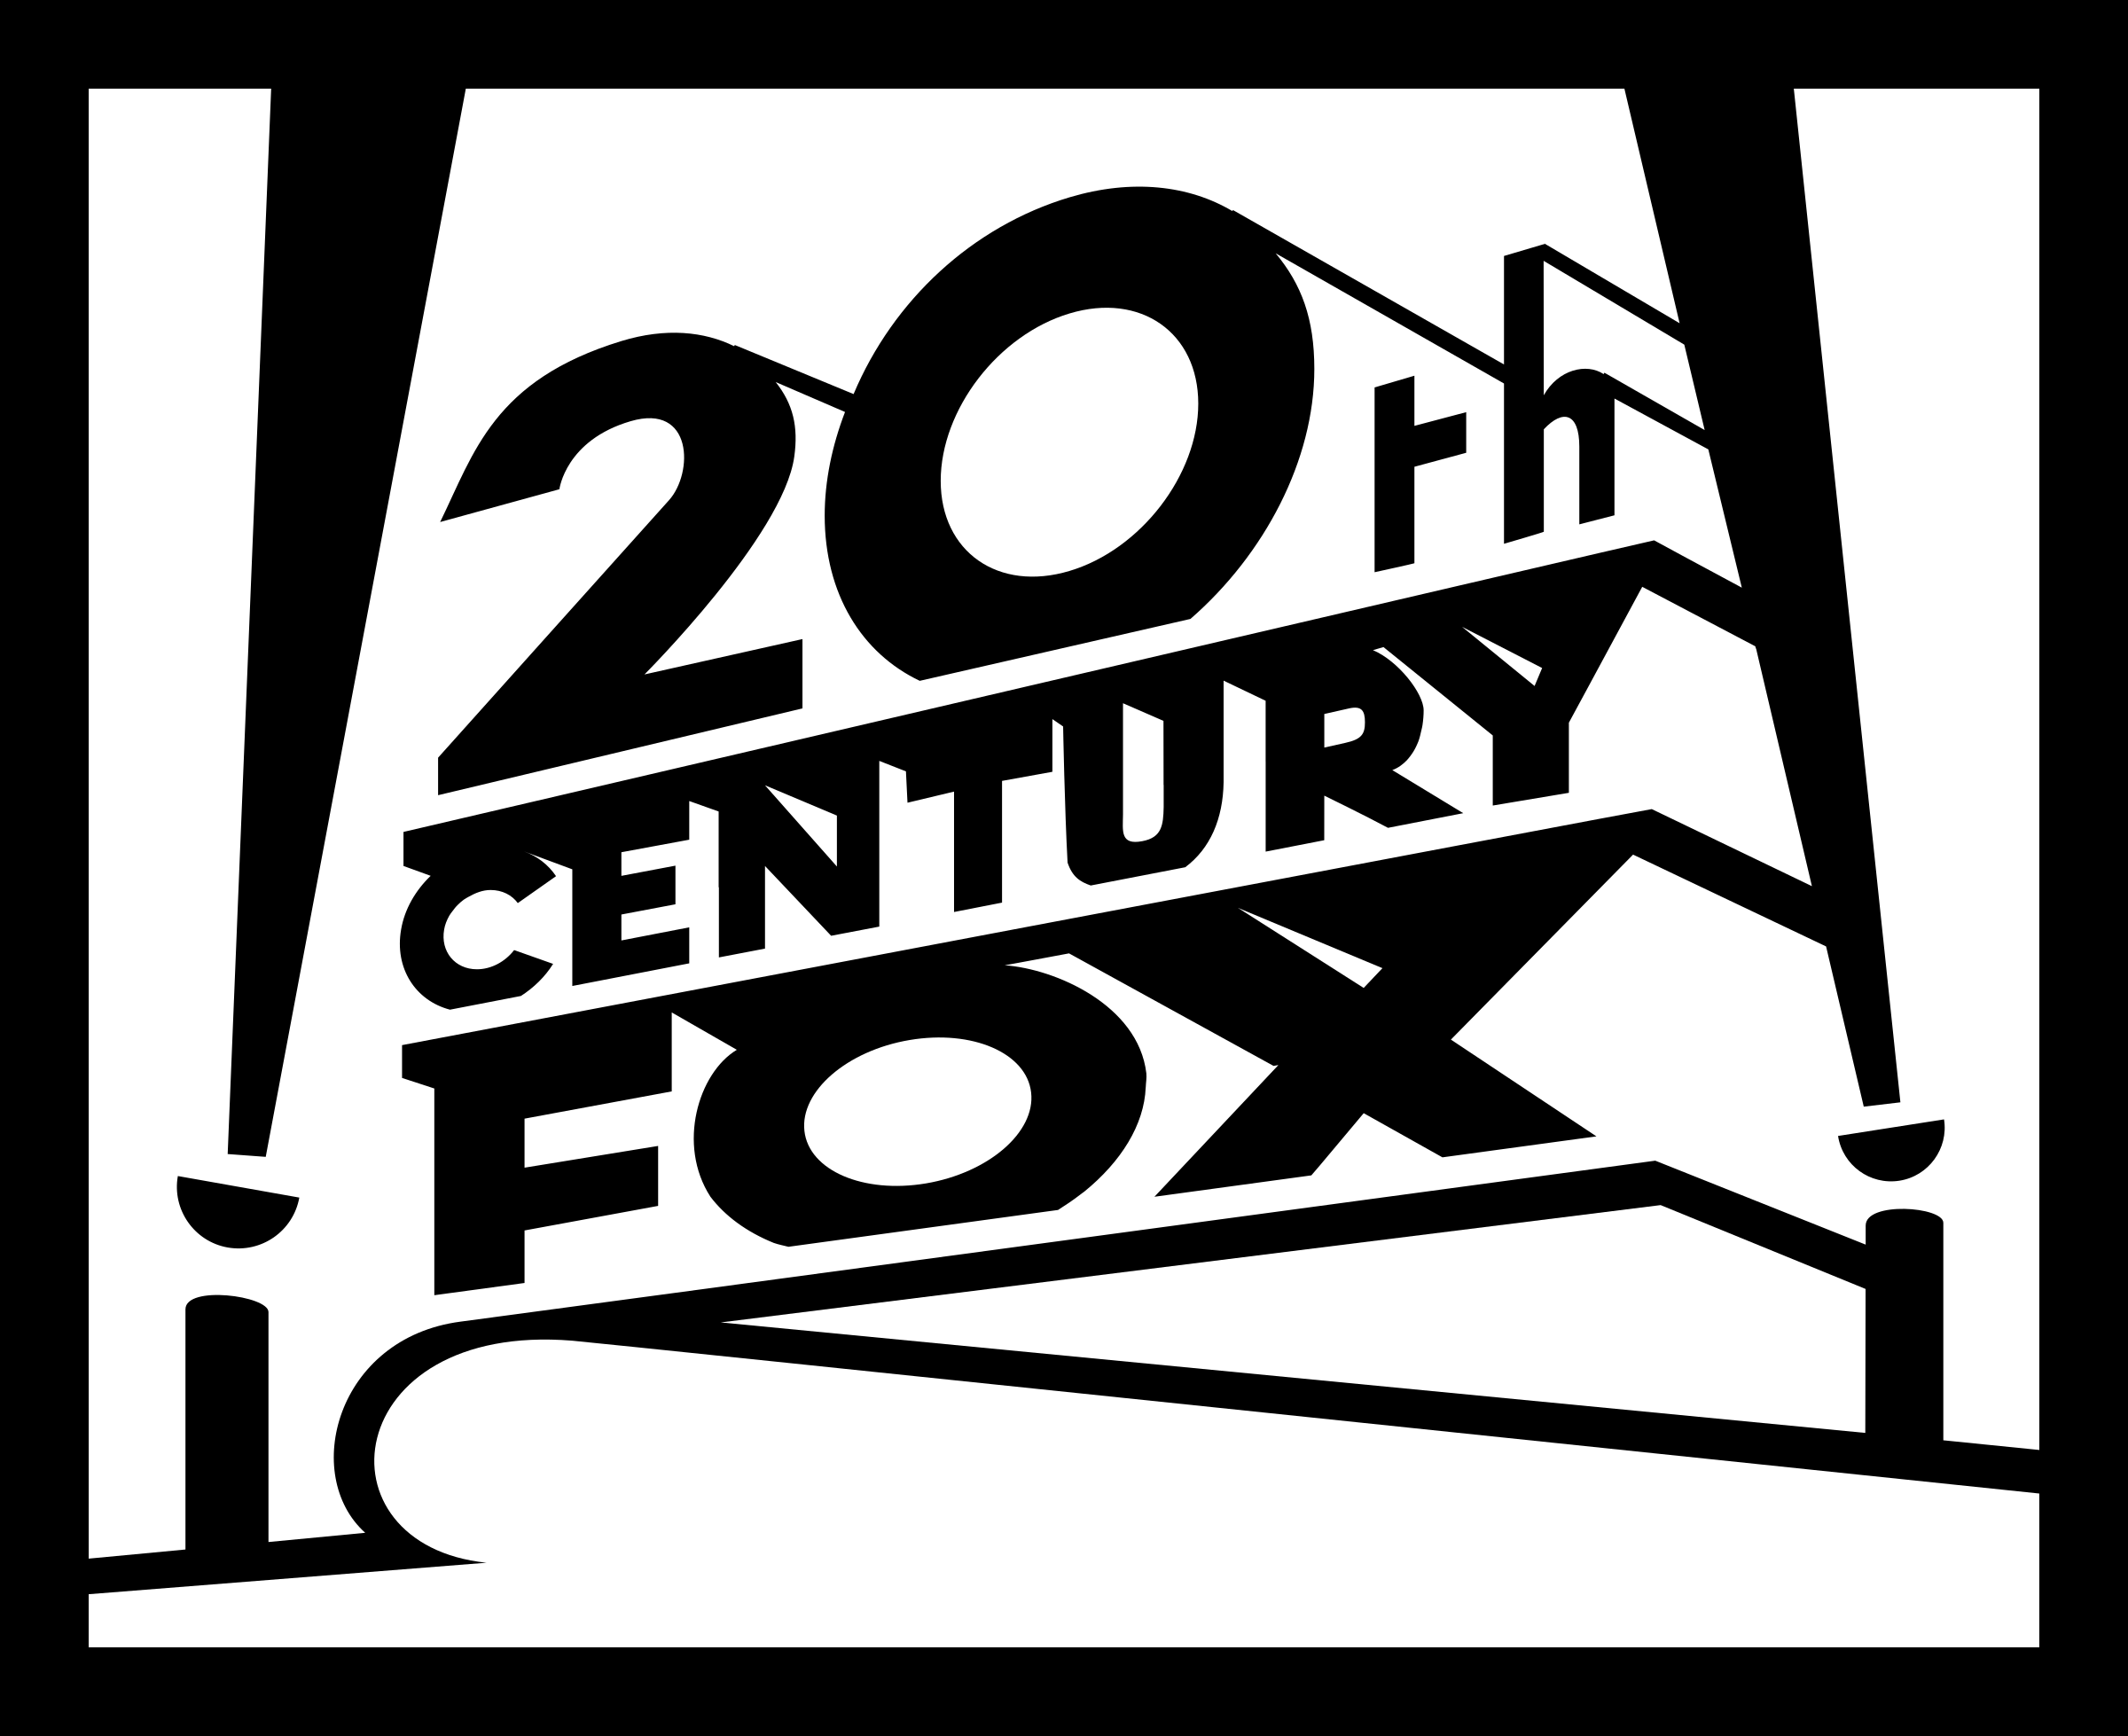 20th Logo - 20th Century Fox Logo PNG Transparent & SVG Vector - Freebie Supply